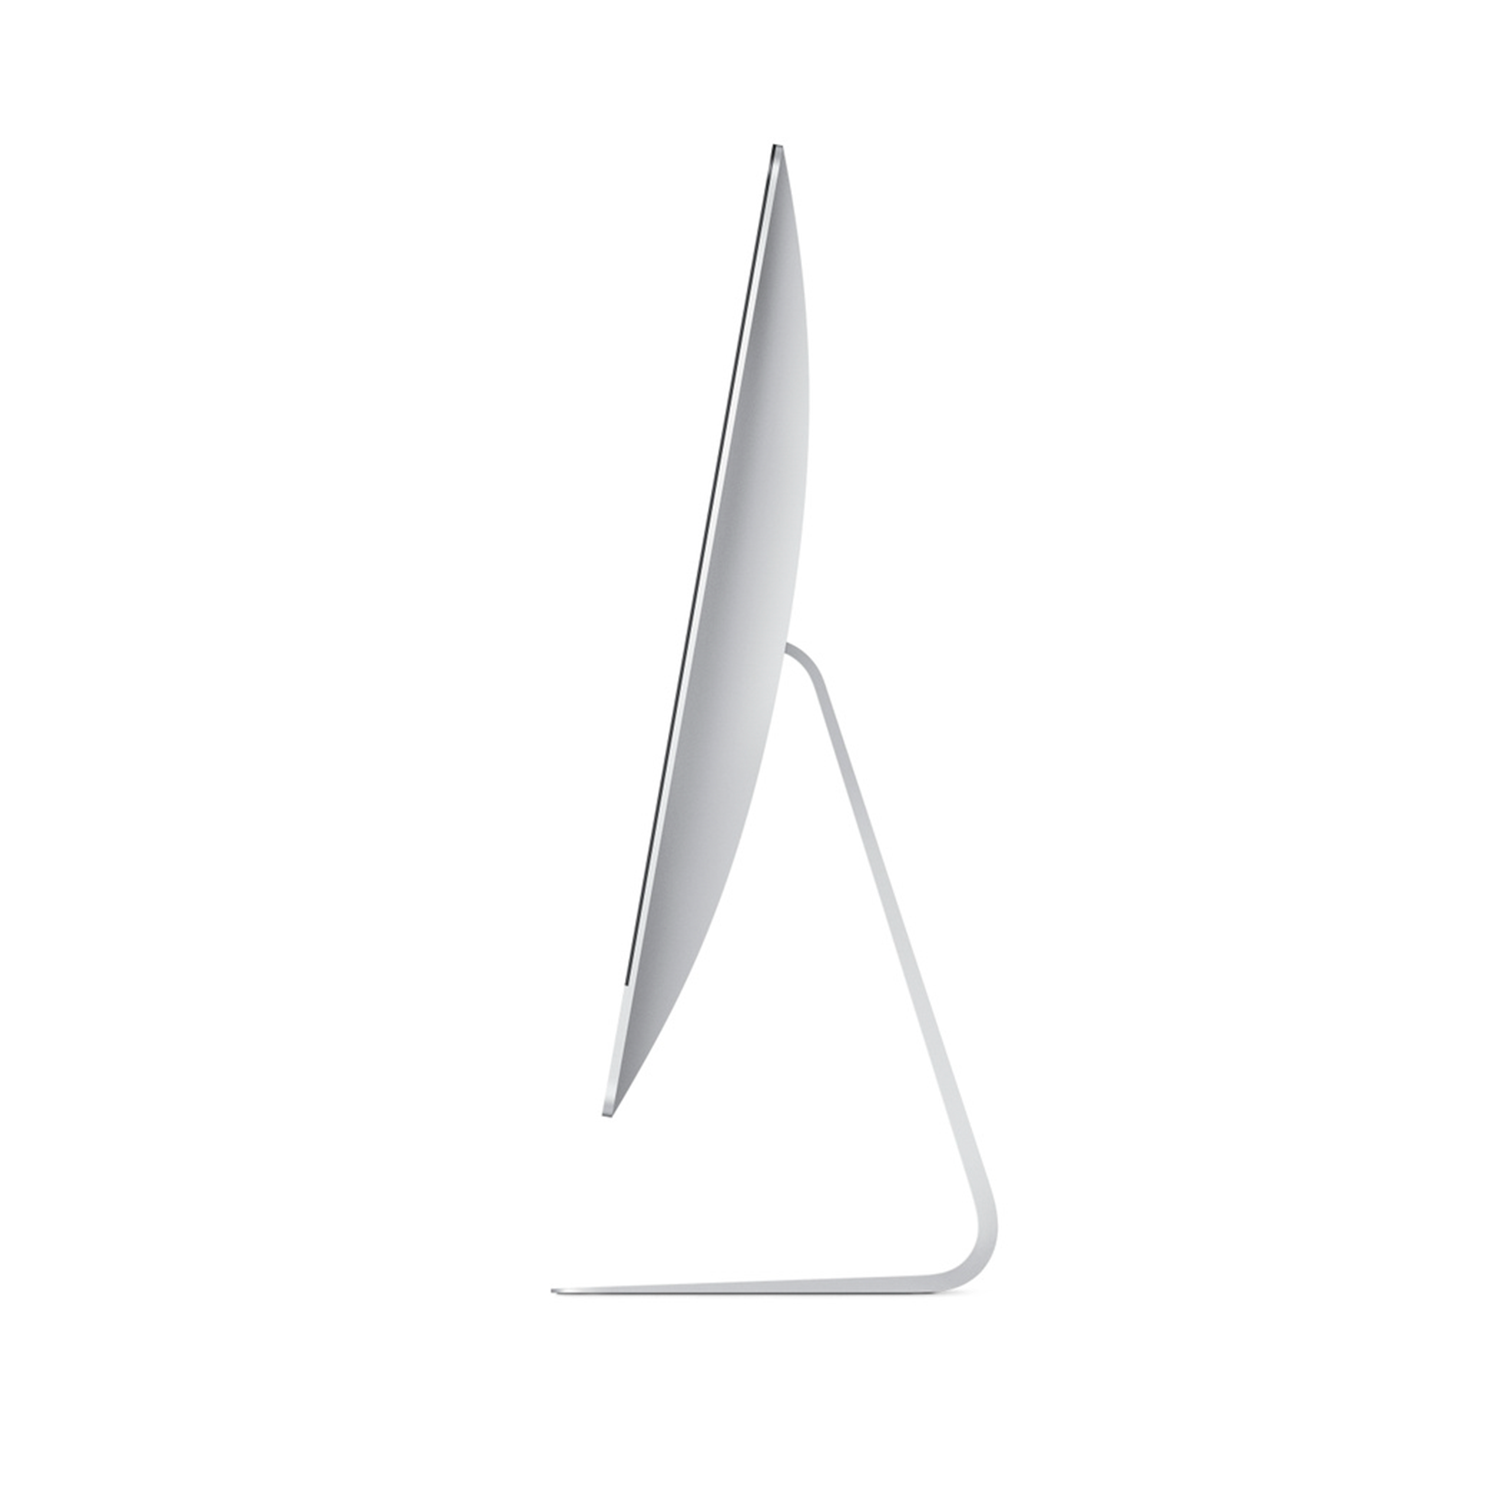 iMac Apple FXWU2LL/A I5 8GB / 512GB / Tela 27"/ 5 K / Radeon 5300 - Prata (CPO)